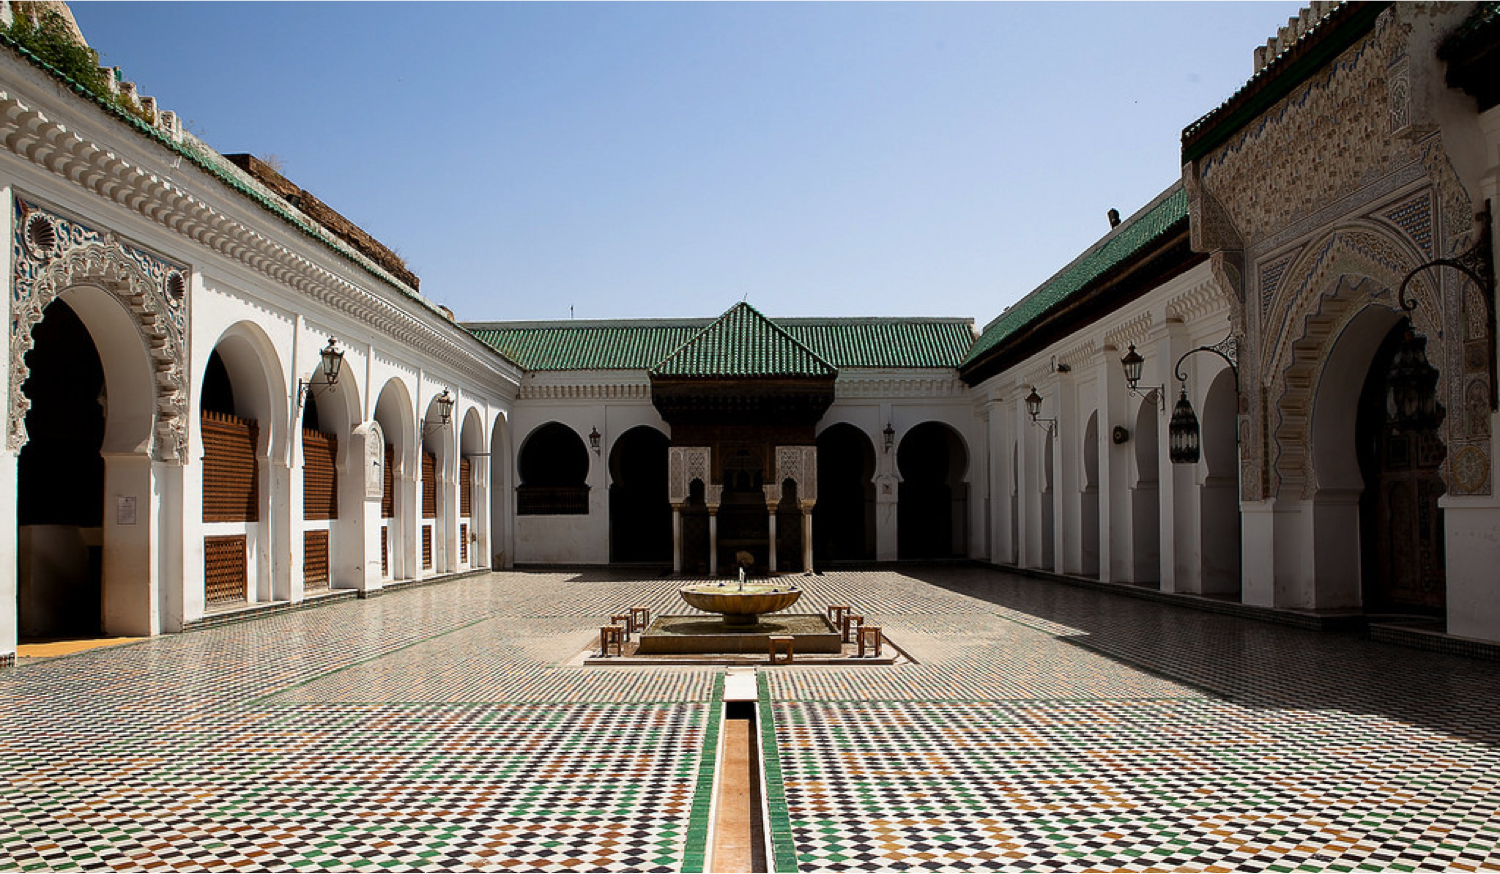 Al university. Аль Карауин университет. Аль-Карауин, Марокко. Университет в Фесе Марокко. Мечеть Аль Карауин в Фесе.